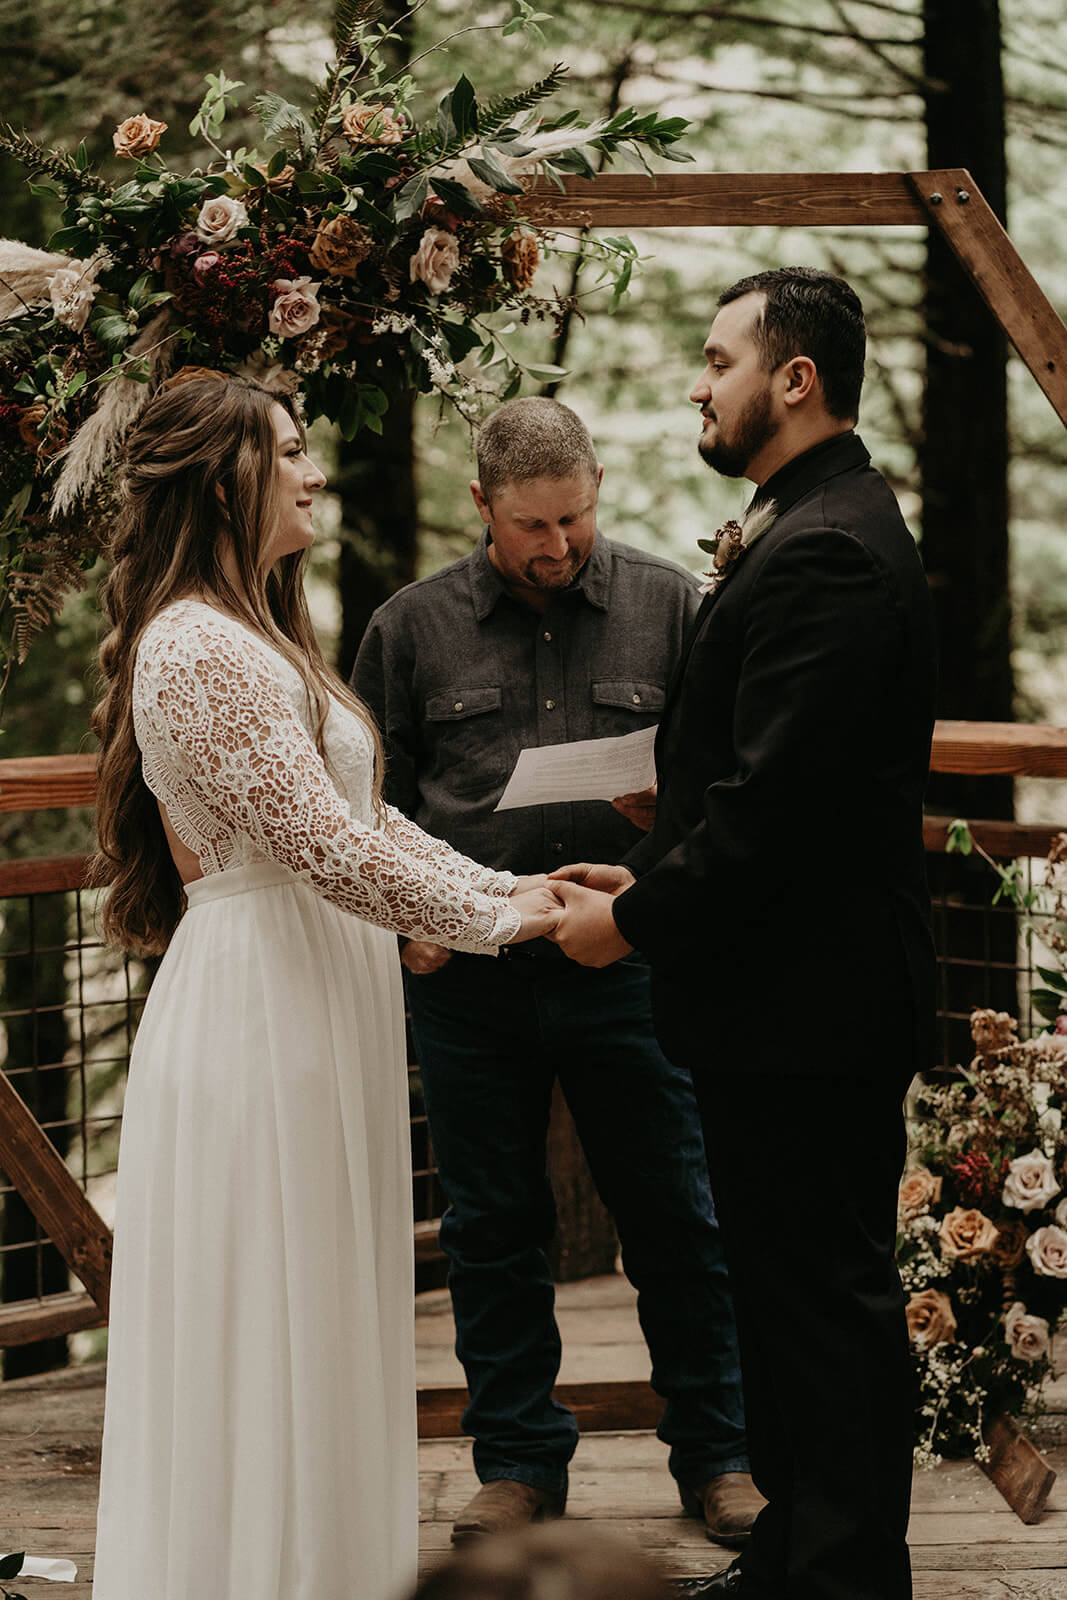 Forest wedding ceremony at Hoyt Arboretum